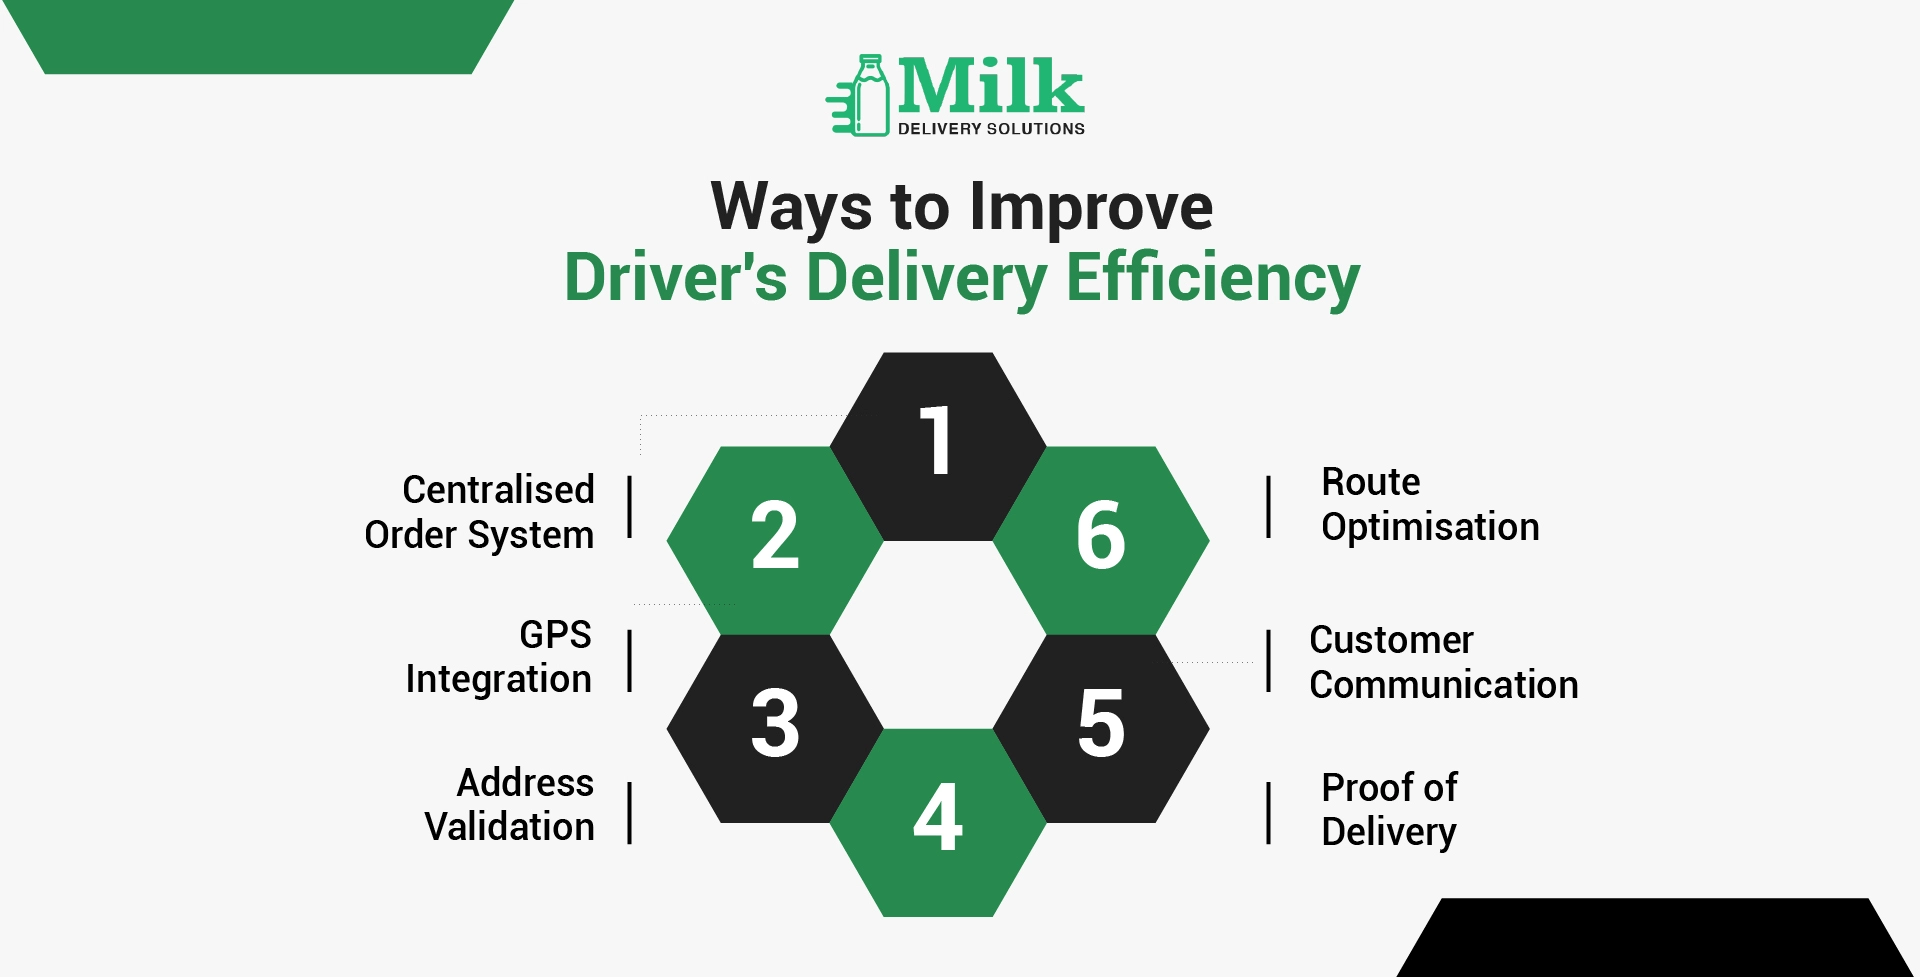 ravi garg, mds, improve delivery efficiency, driver efficiency, centralised order system, gps, address validation, route optimisation, customer communication, proff of delivery